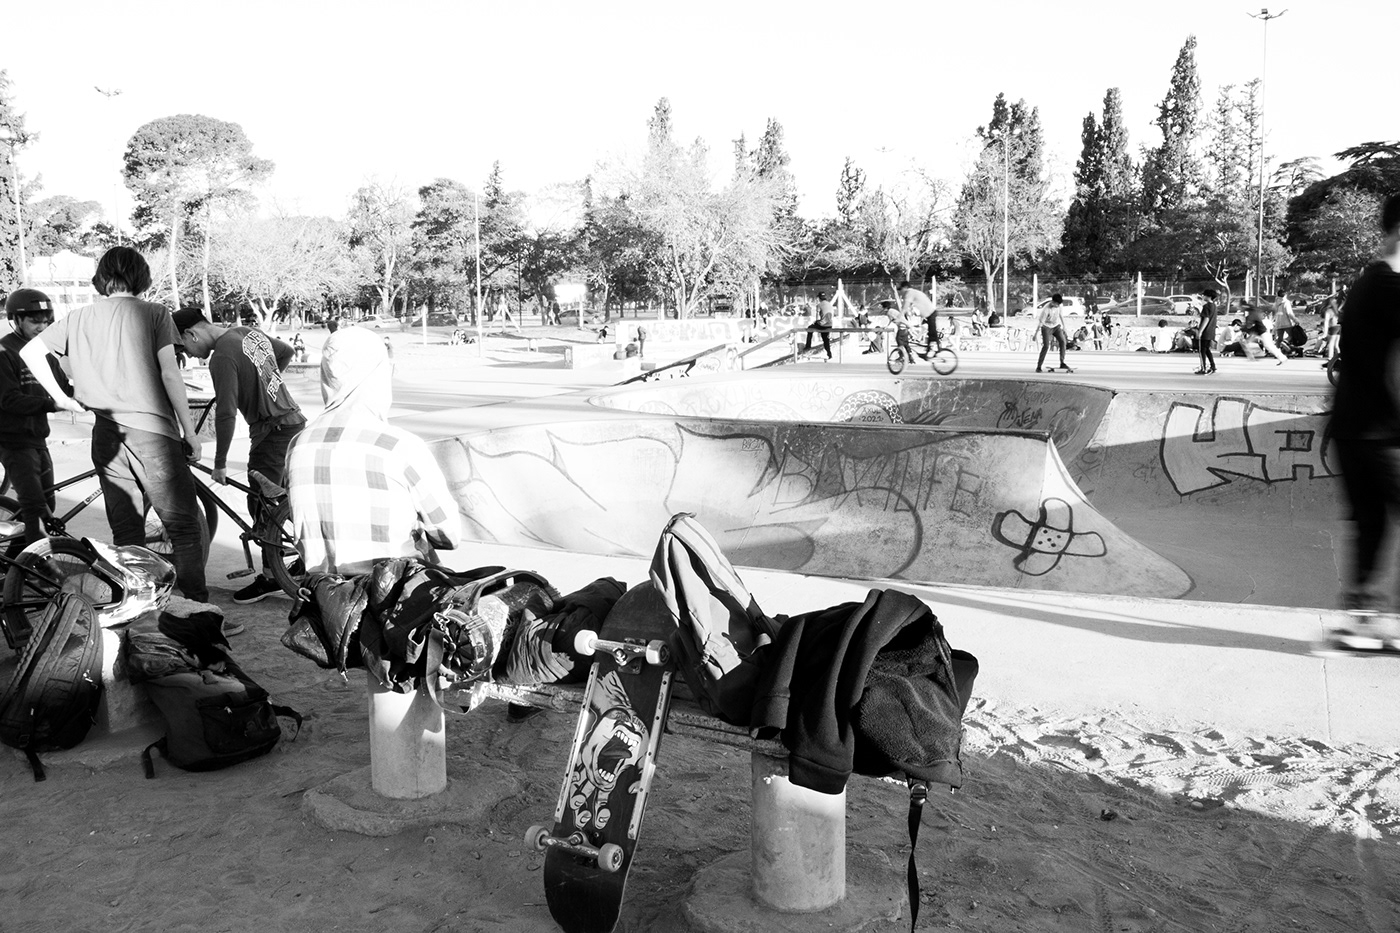 Canon cordoba argentina photographer Photography  photoshoot skate